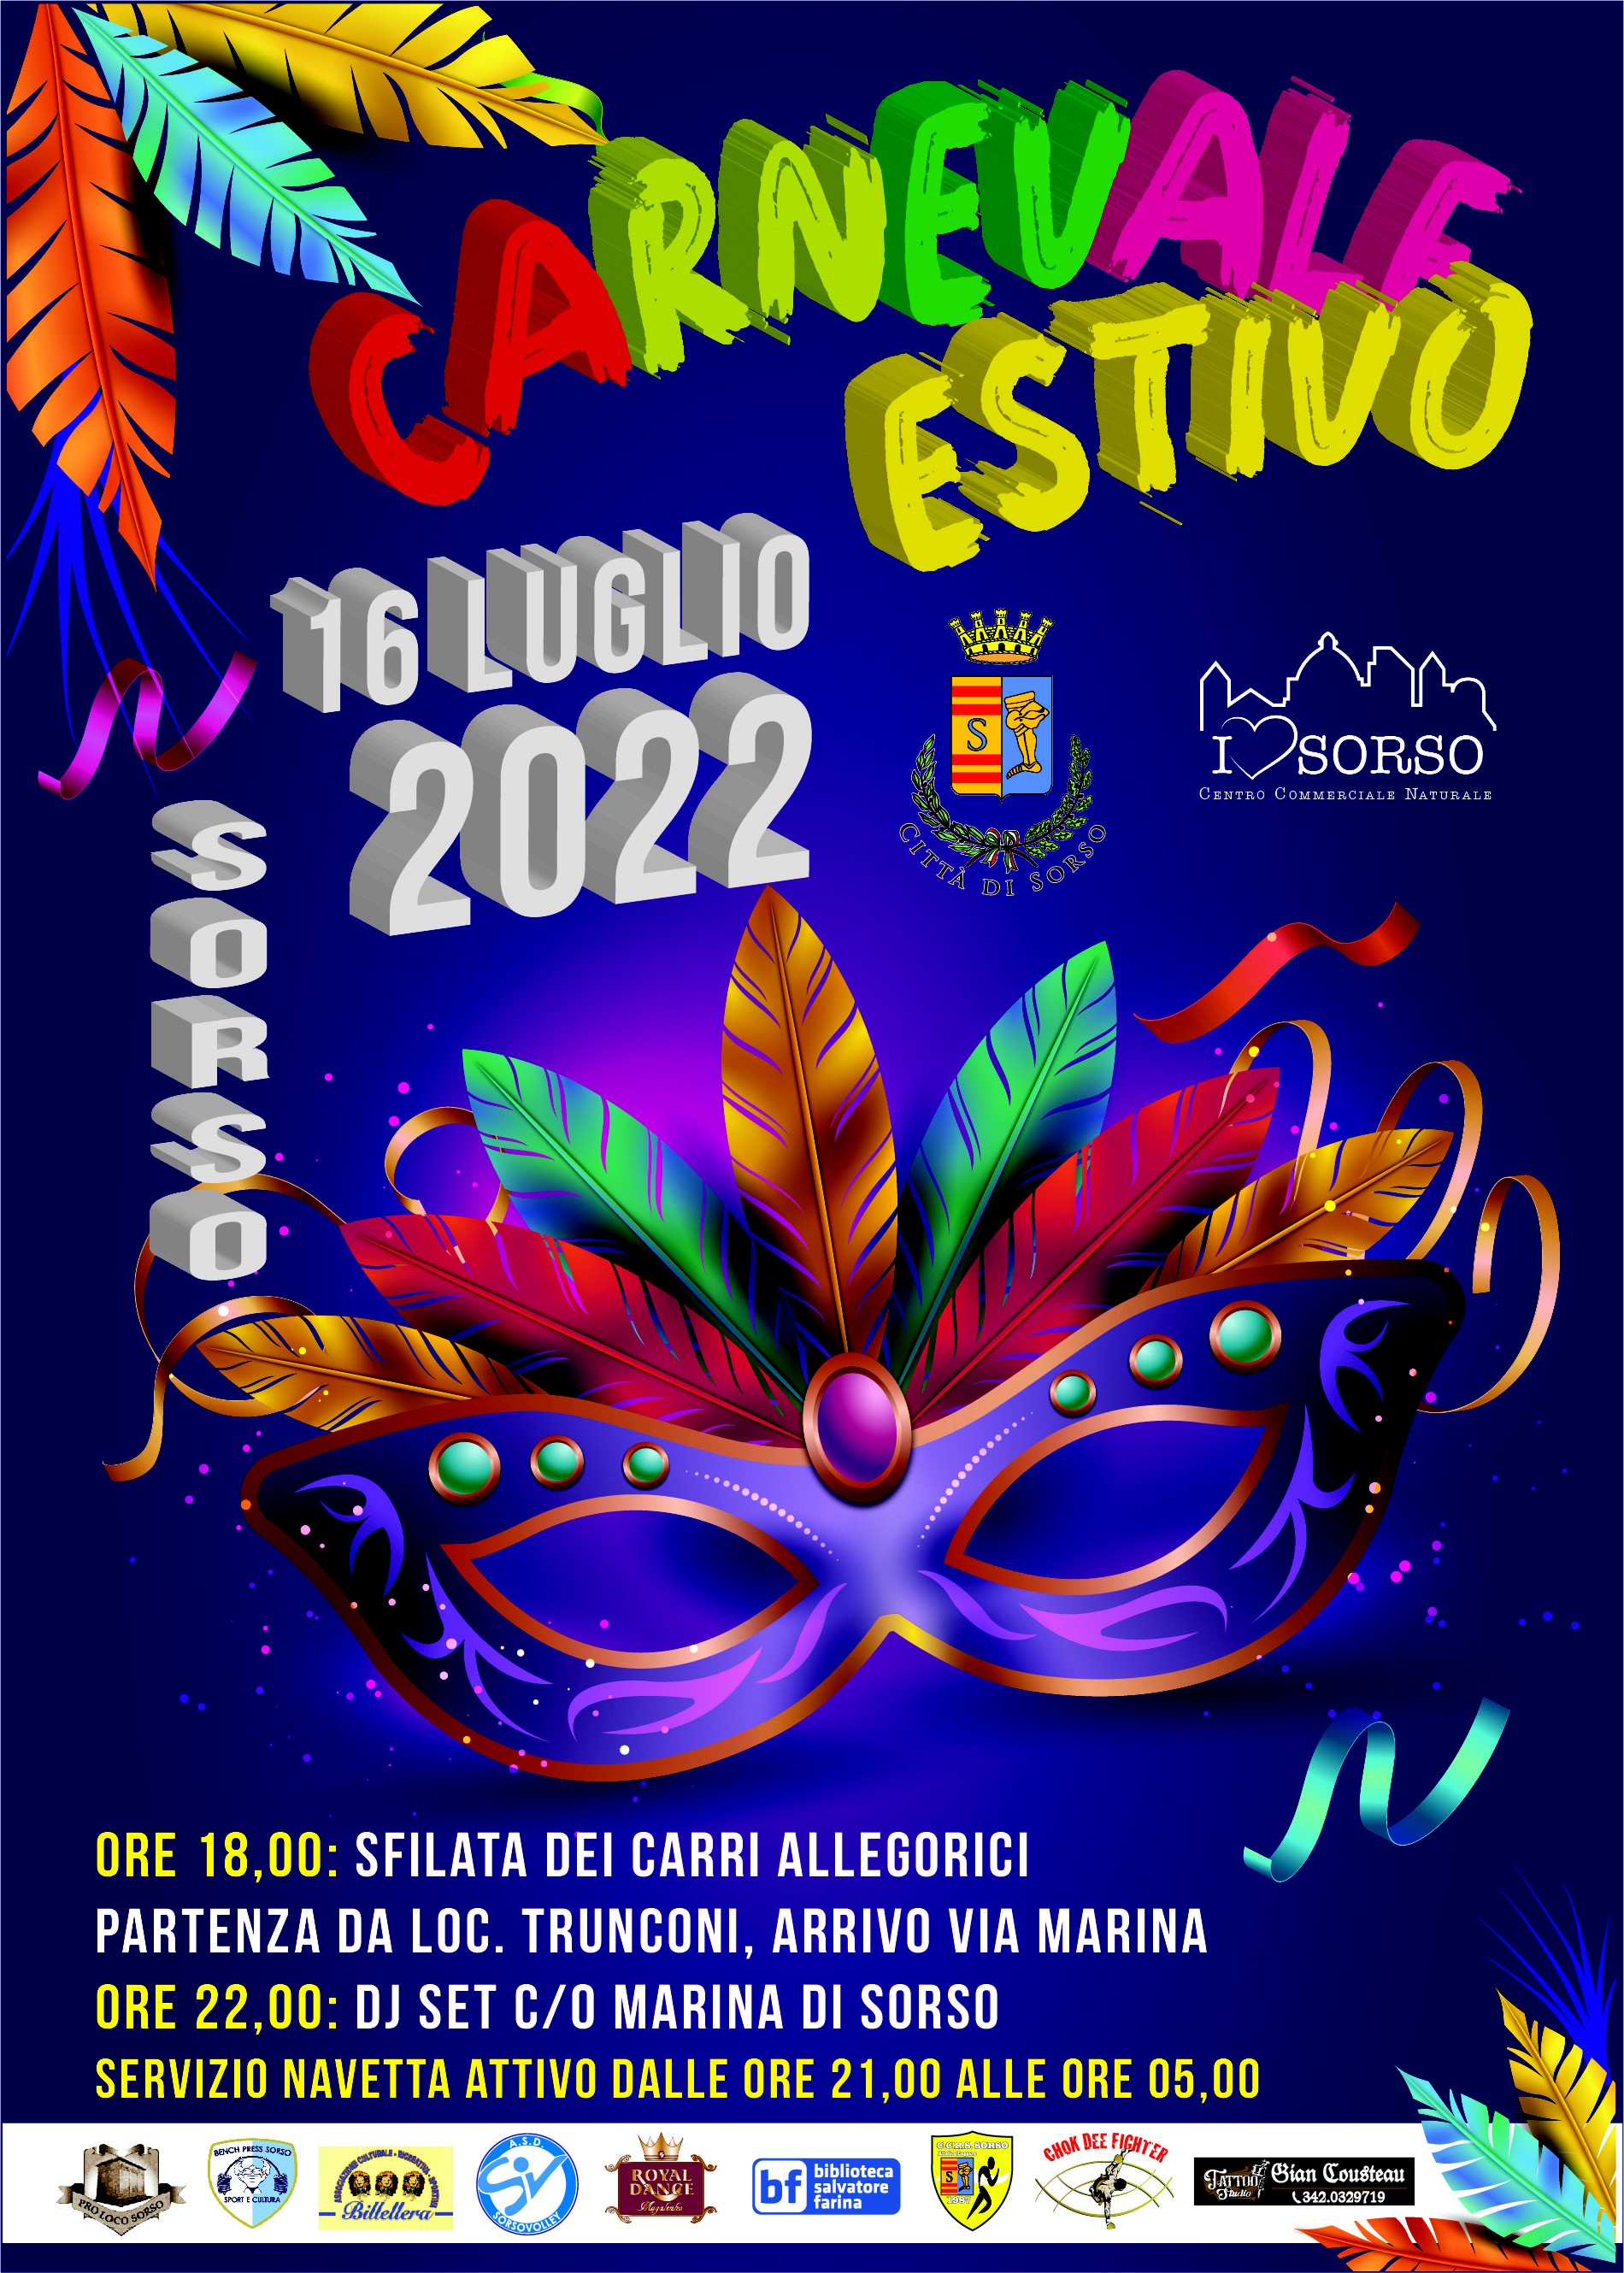 Locandina Carnevale Estivo 2022 2